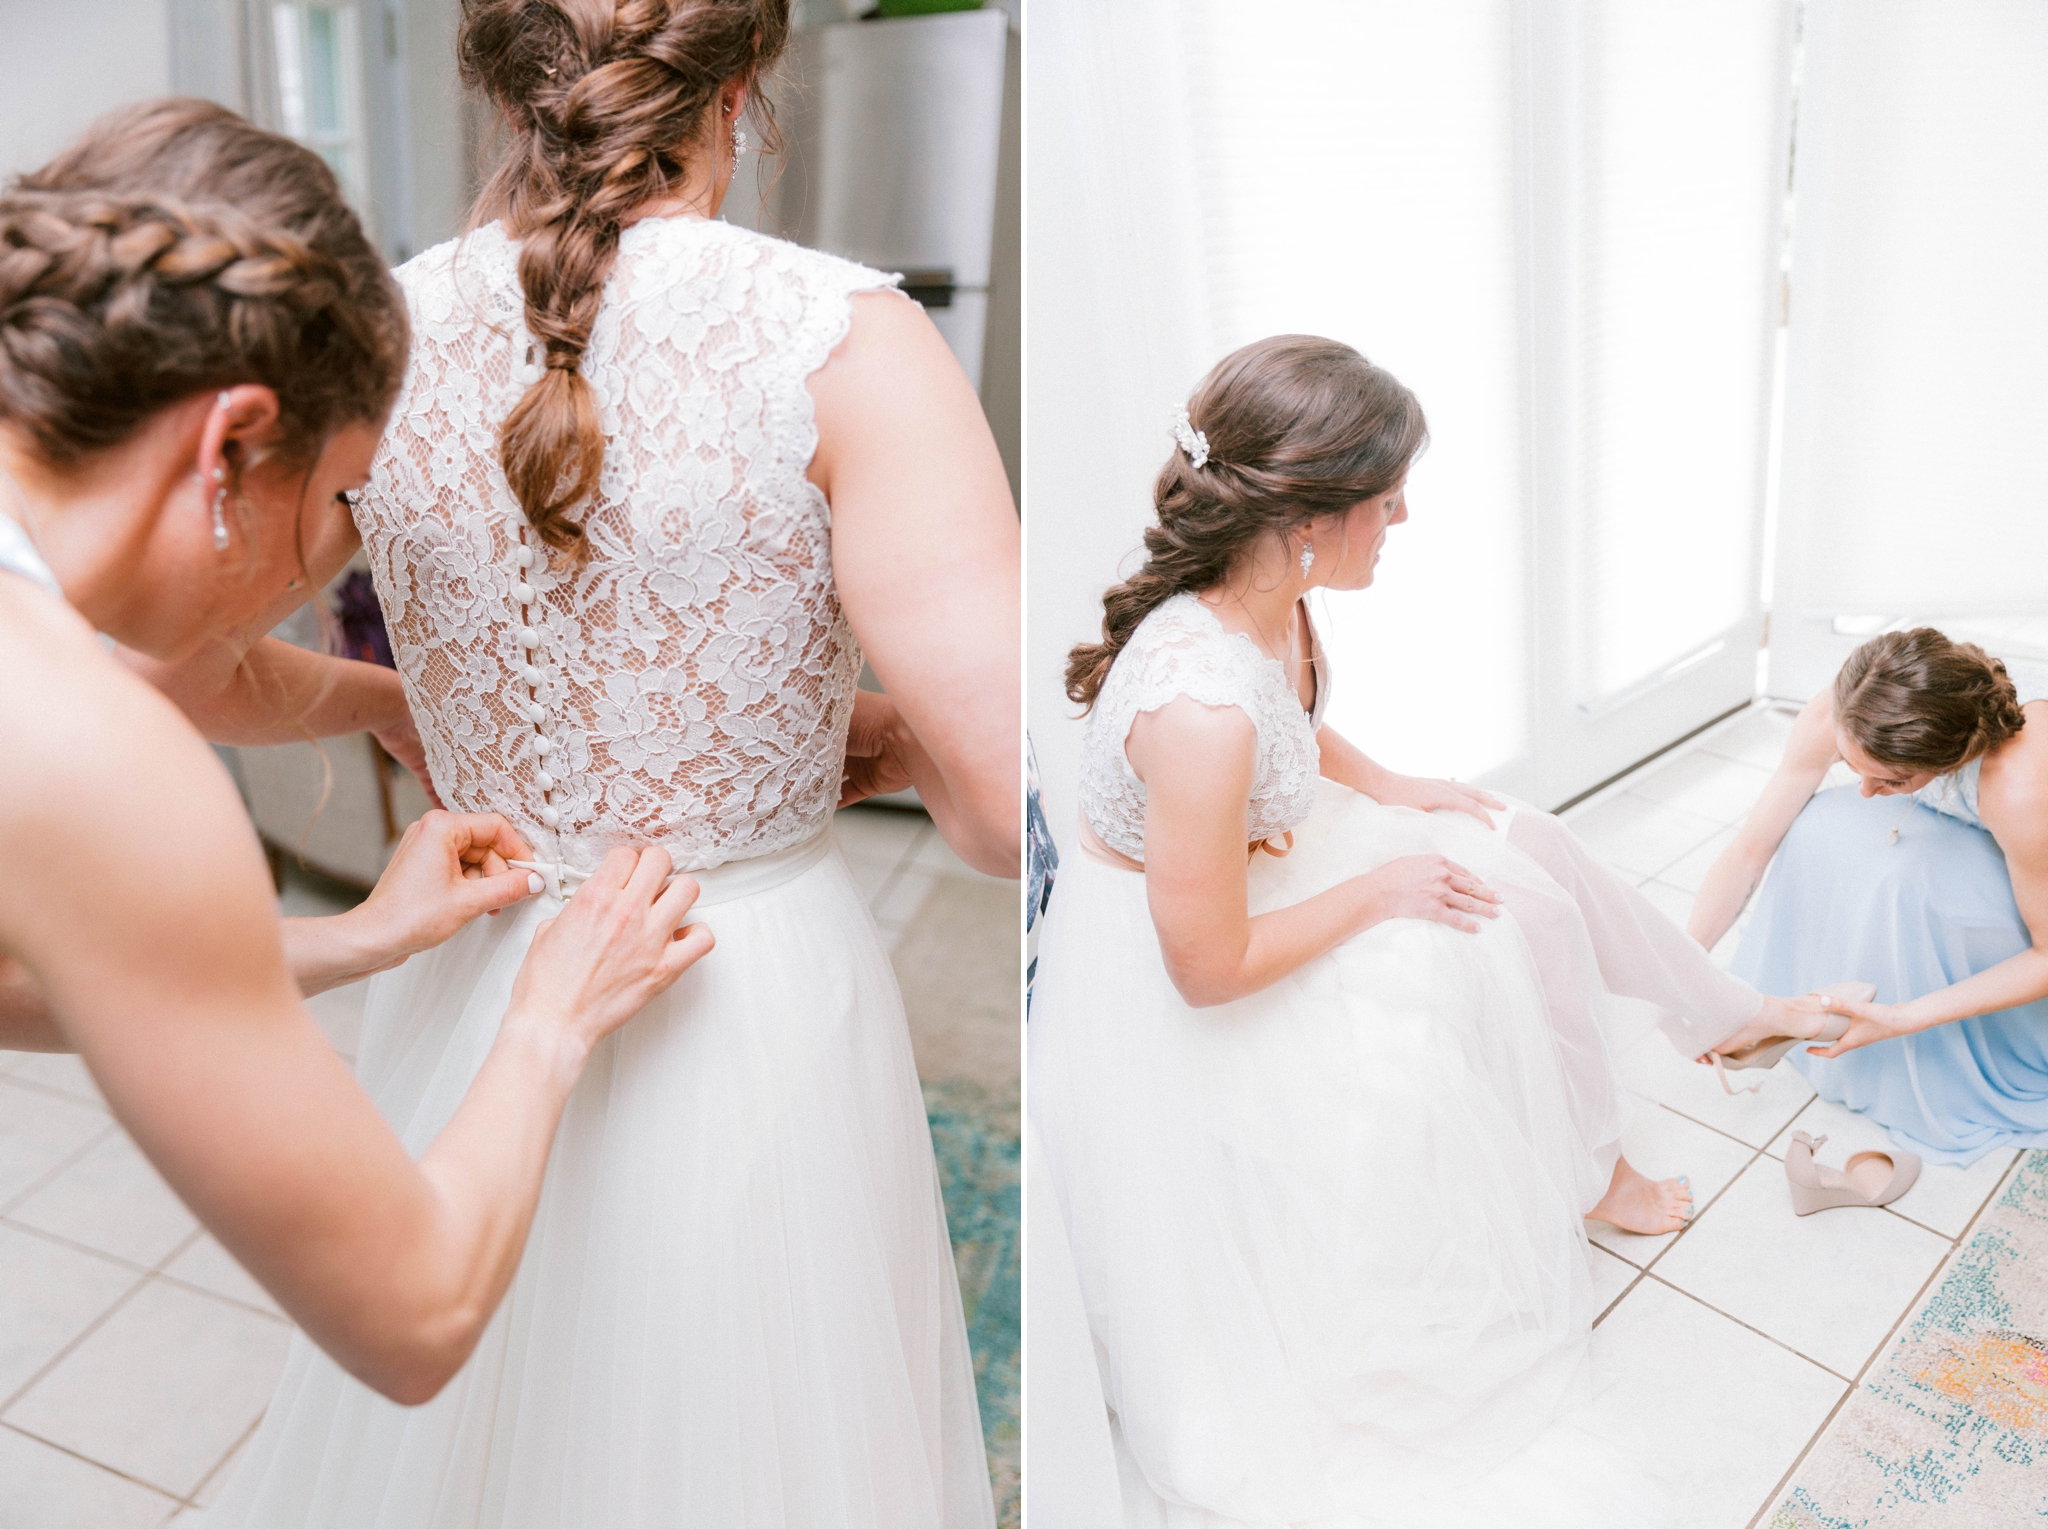  bride getting into her dress and shoes - Honolulu Oahu Hawaii Wedding Photographer 